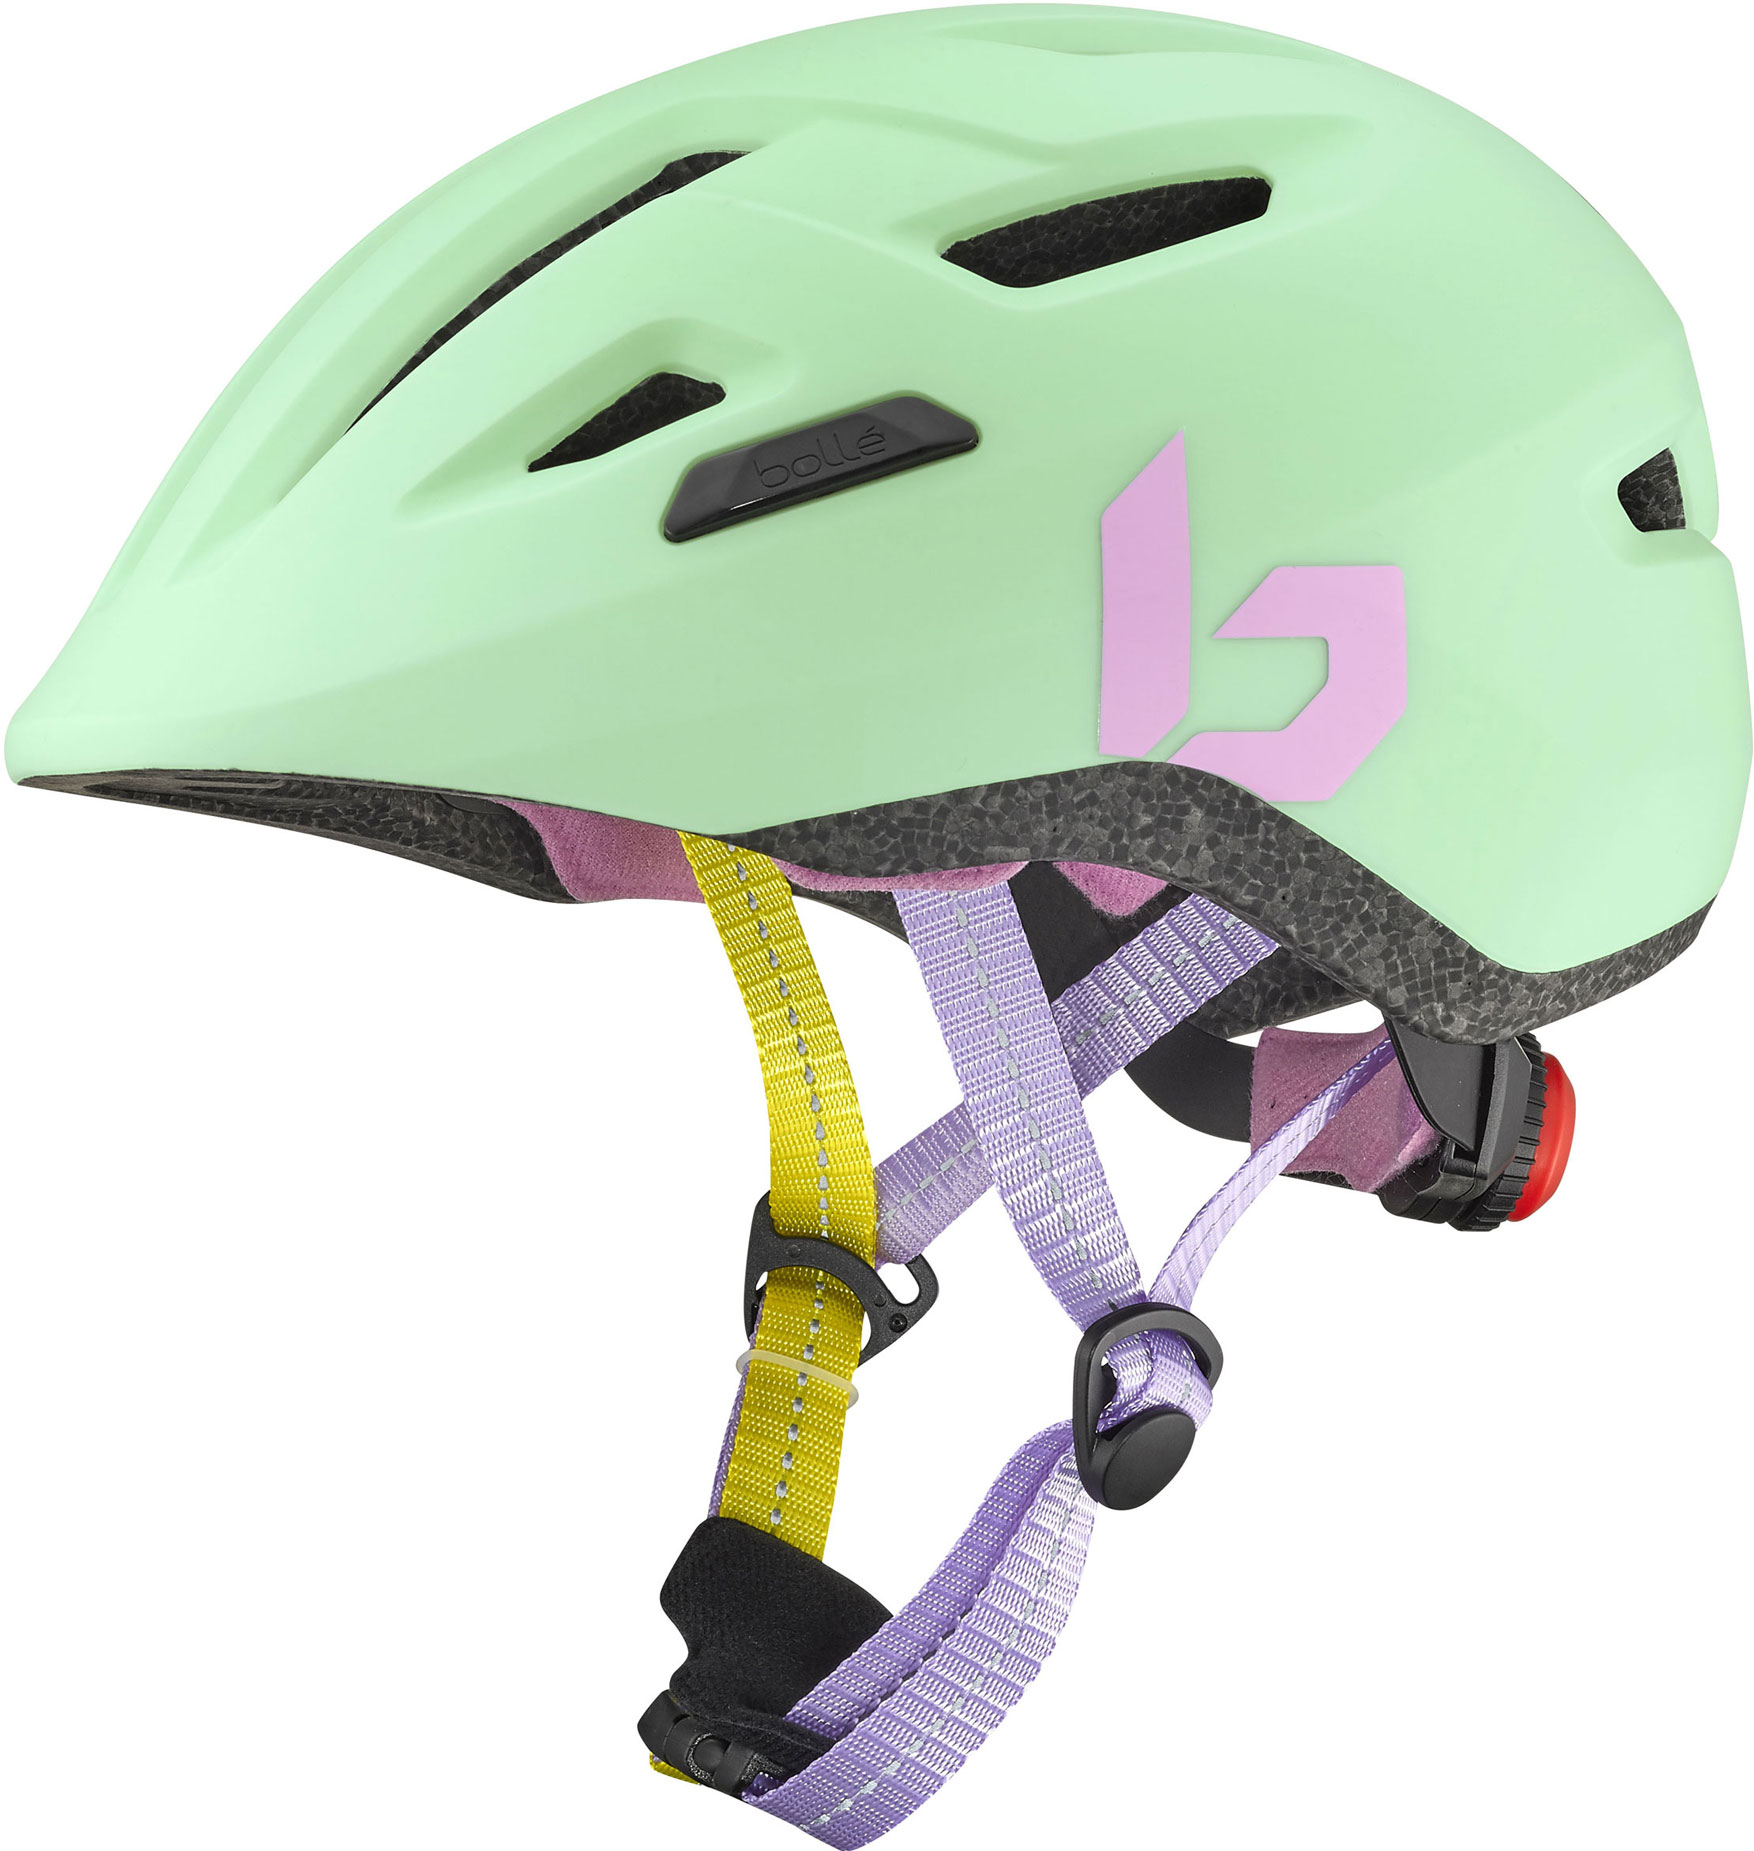 Juniors’ cycling helmet